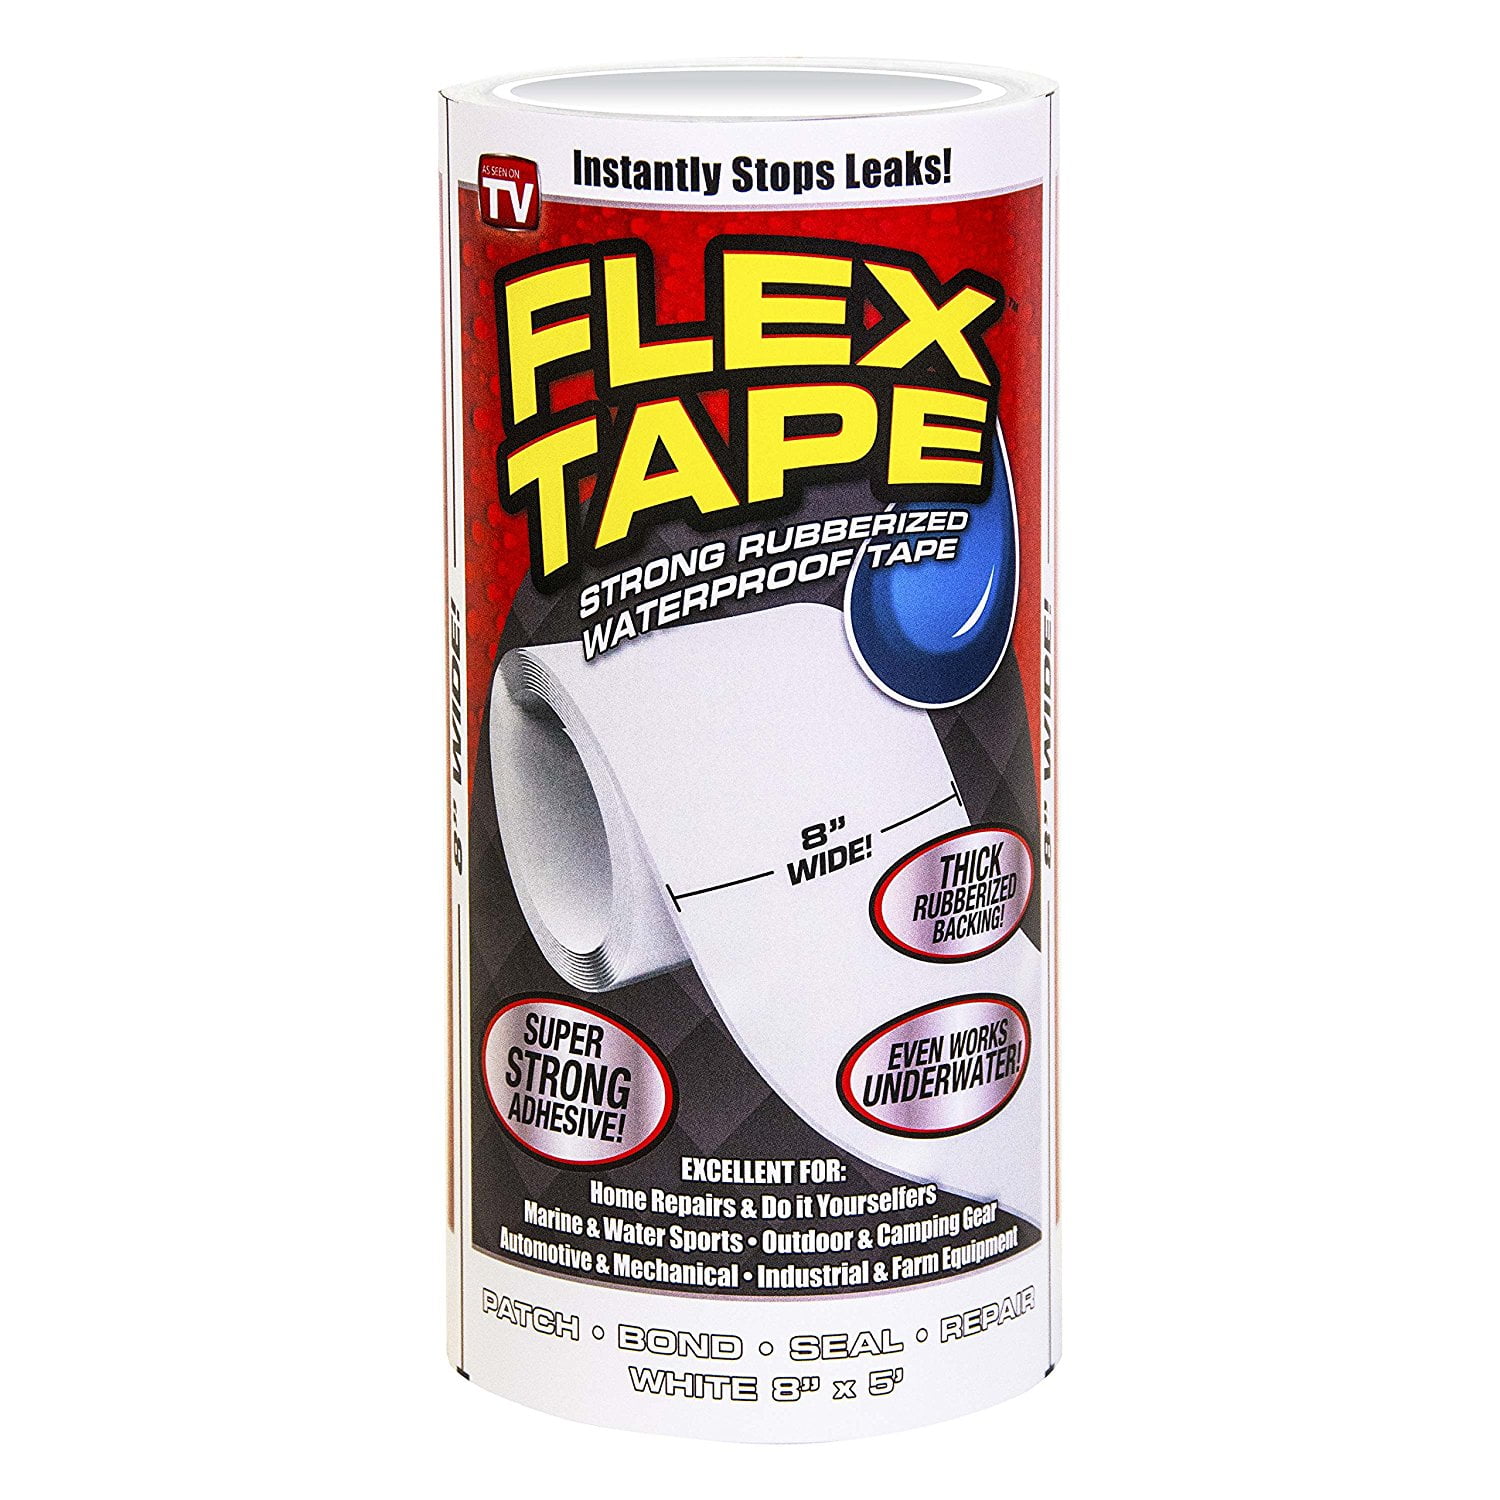 Flex Tape Rubberized Waterproof Tape, 8 inches x 5 feet, White